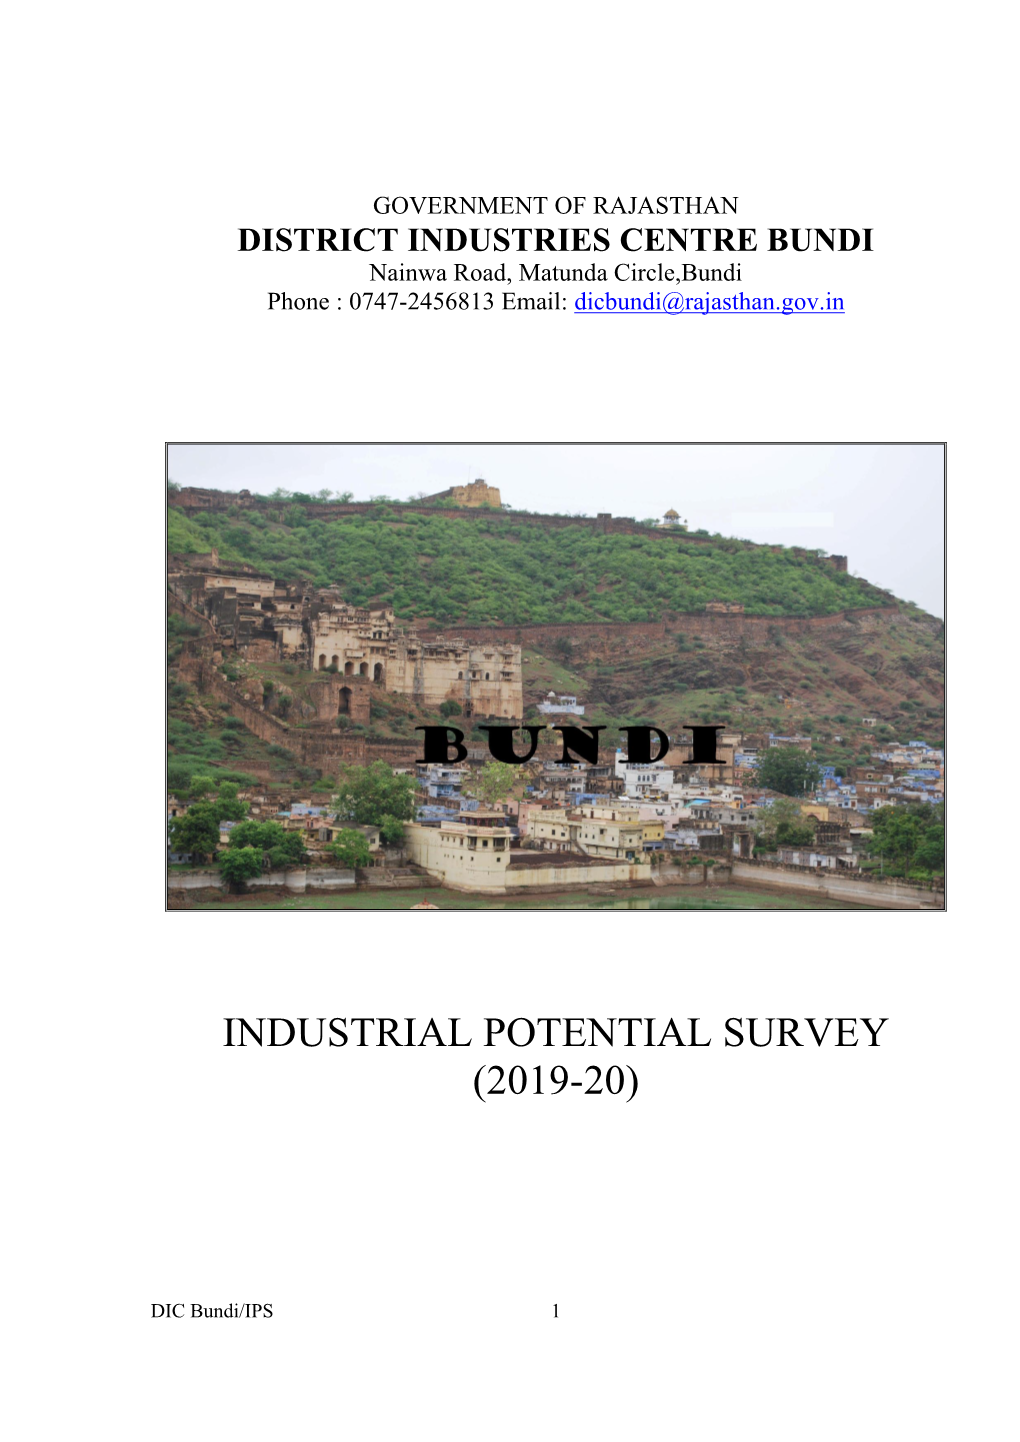 Industrial Potential Survey (2019-20)